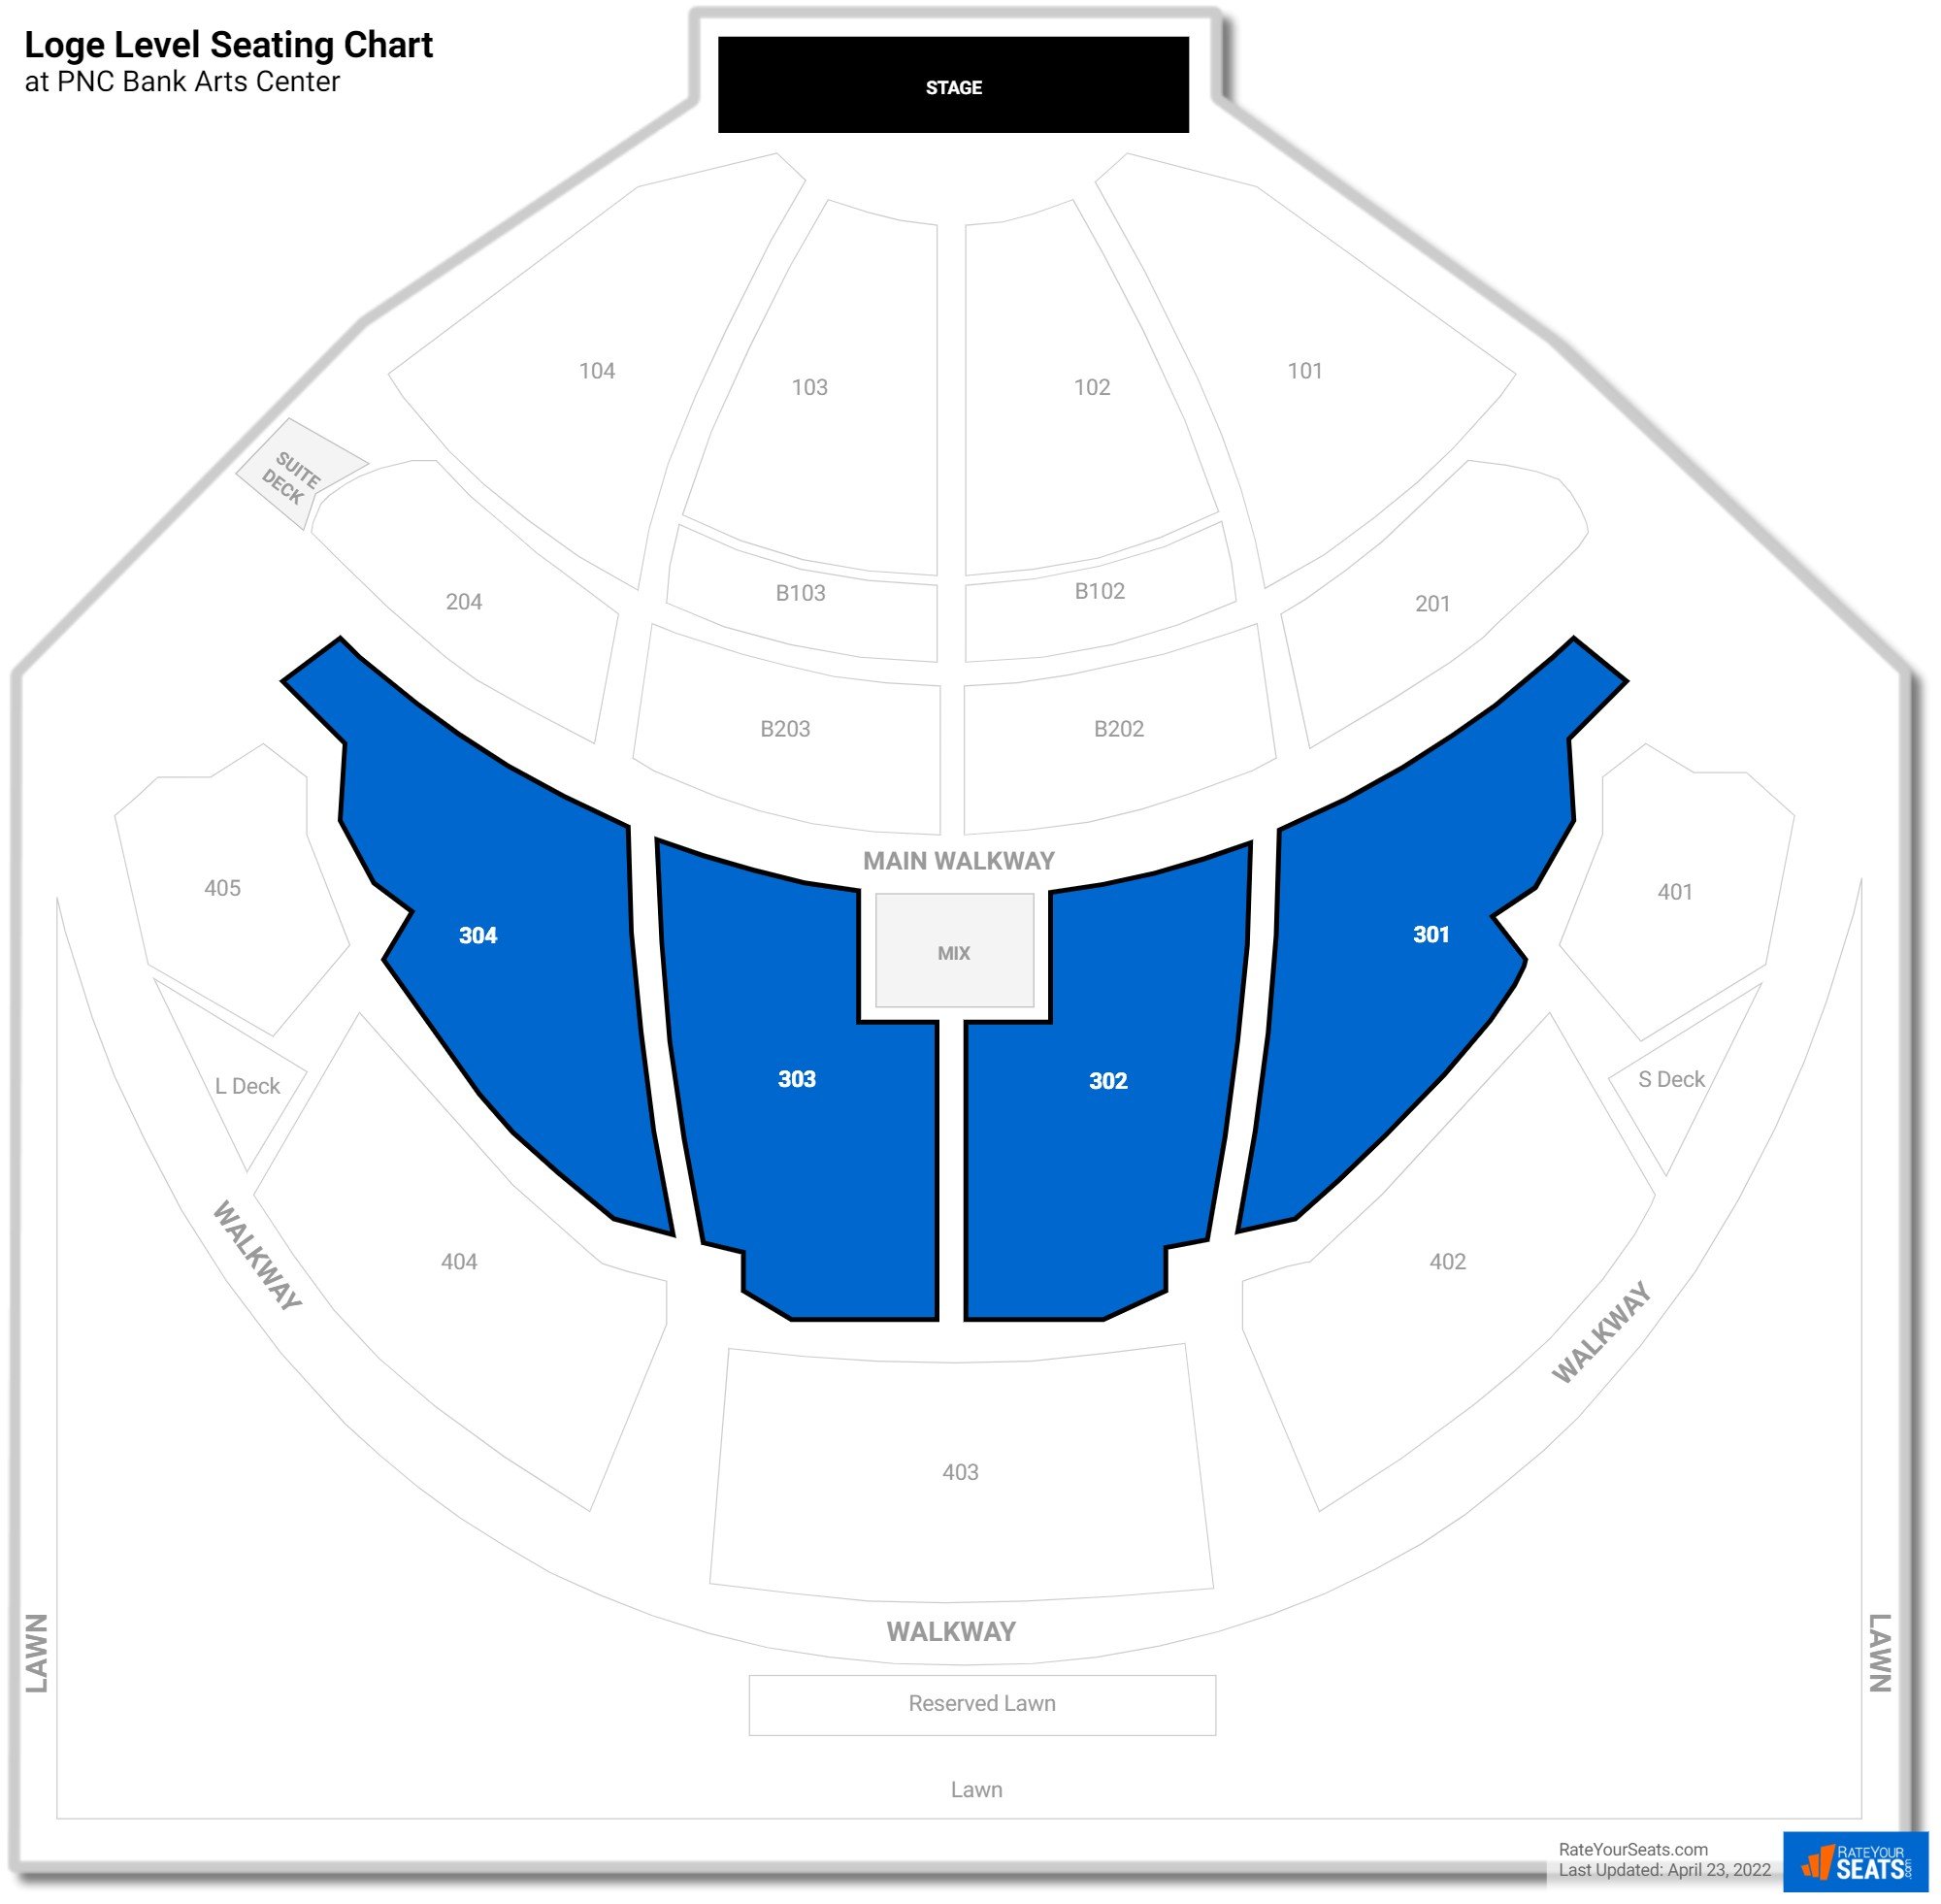 Concert Loge Level Seating Chart at PNC Bank Arts Center